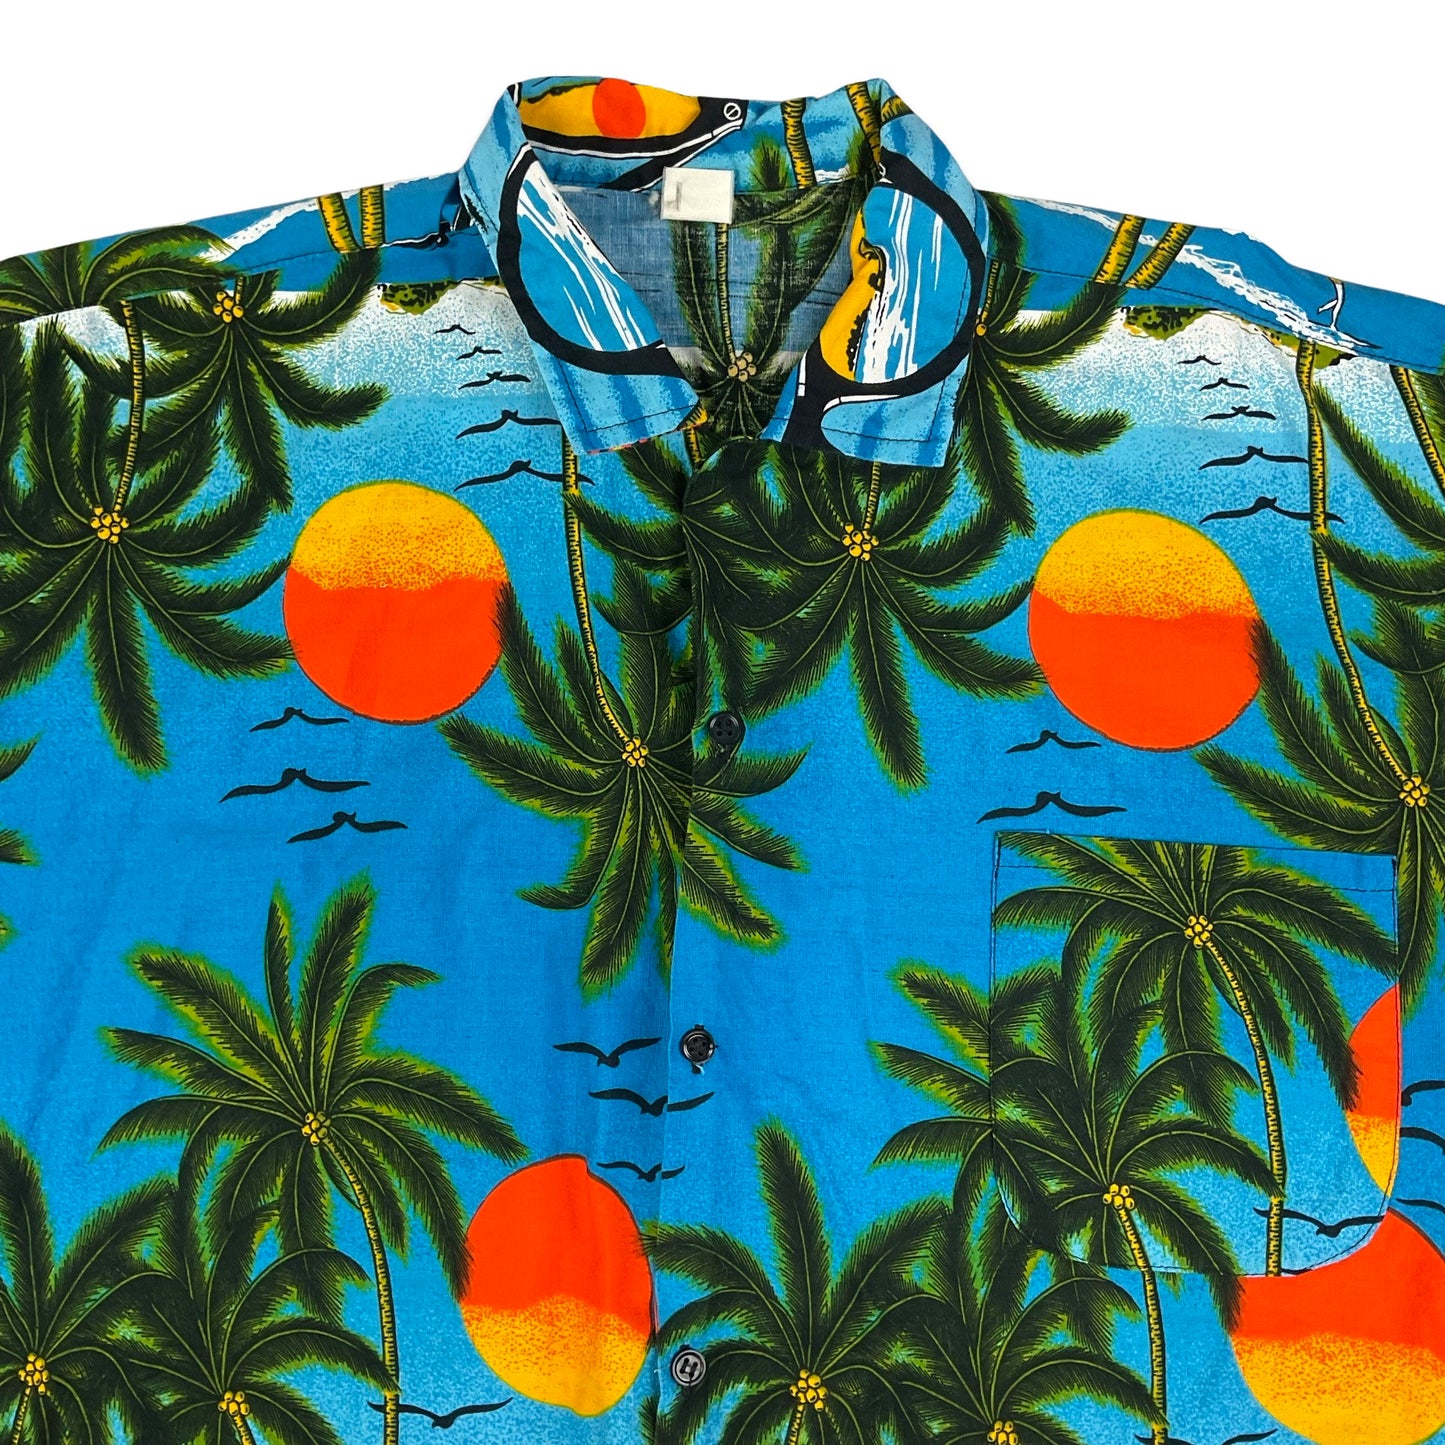 Vintage Beach Print Hawaiian Shirt XXL